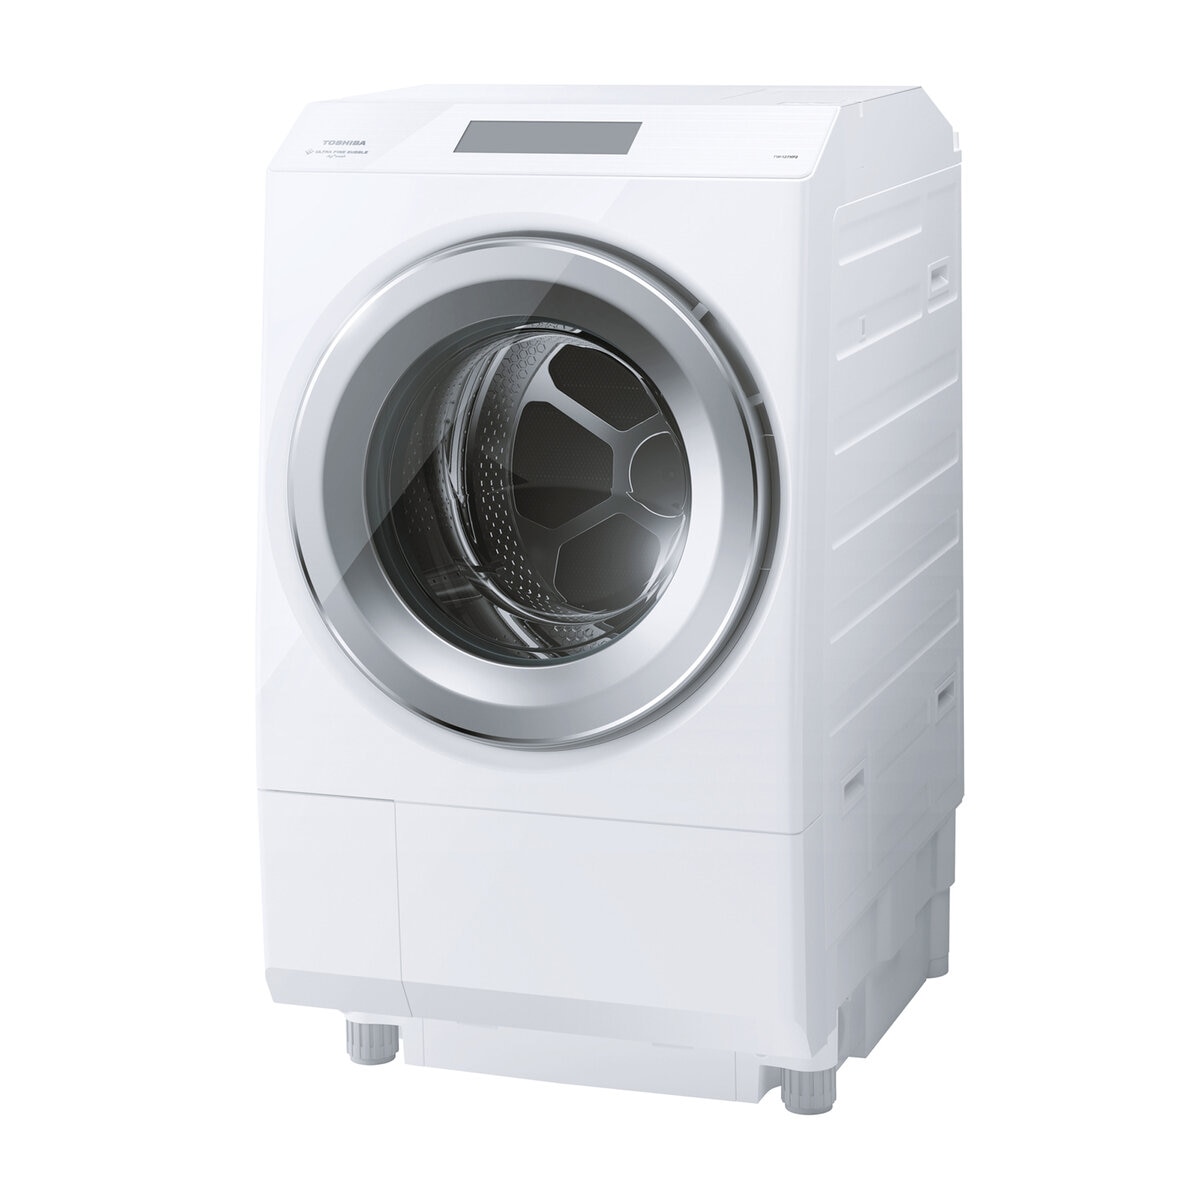 TOSHIBA ドラム式洗濯乾燥機 ZABOON 洗濯12kg 乾燥 7kg | Costco Japan